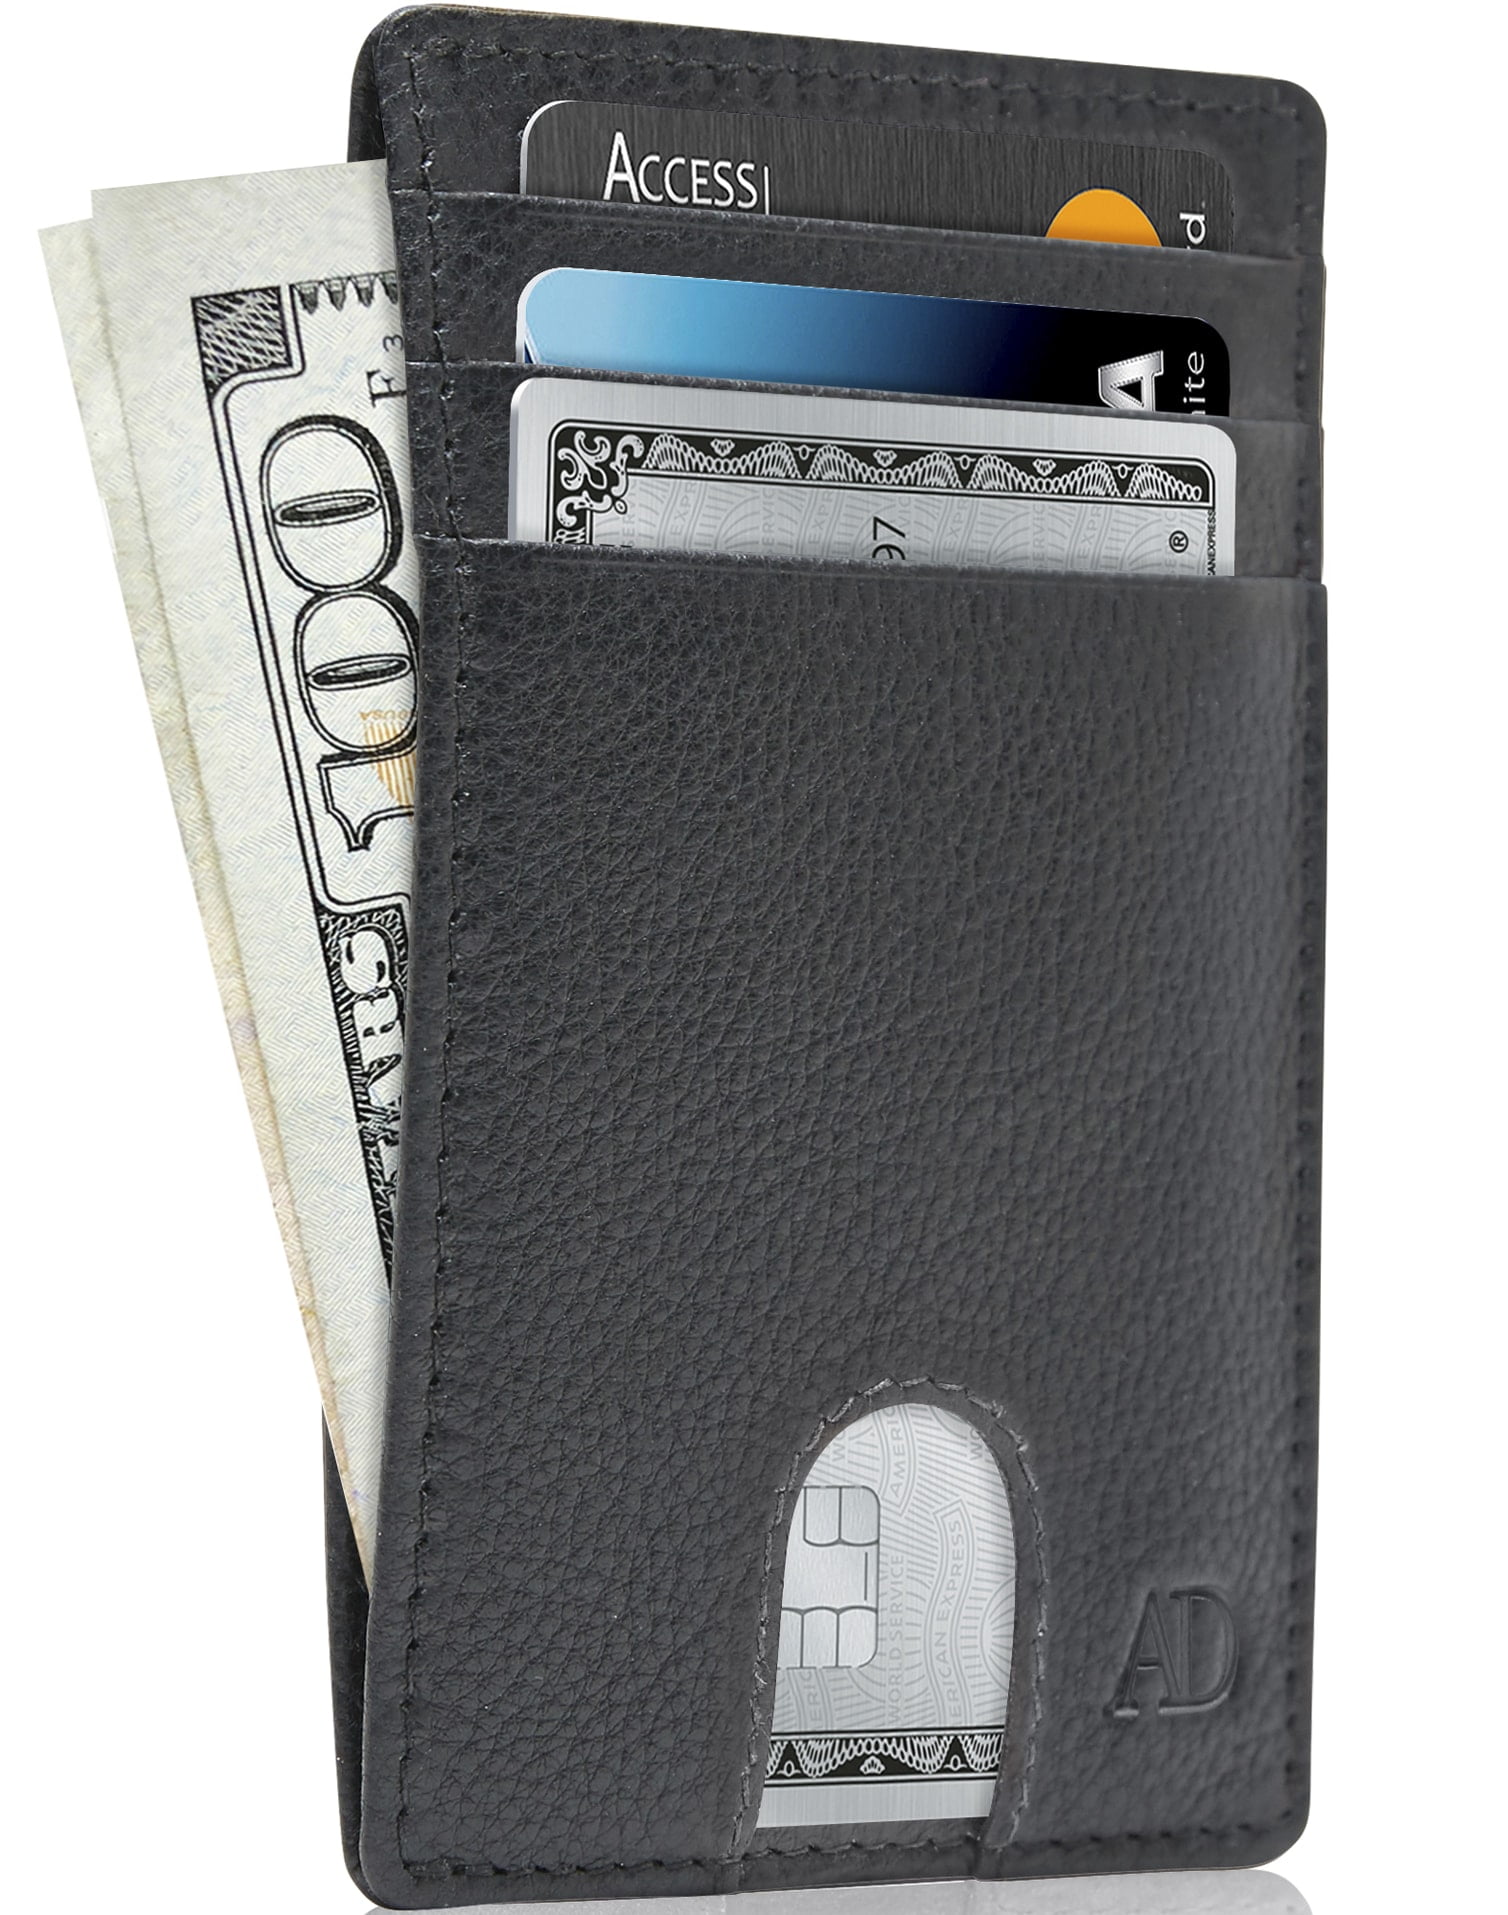 Men's wallet Hipster Bifold Leather Wallet.10 card slot Natural Grain wallet BN 